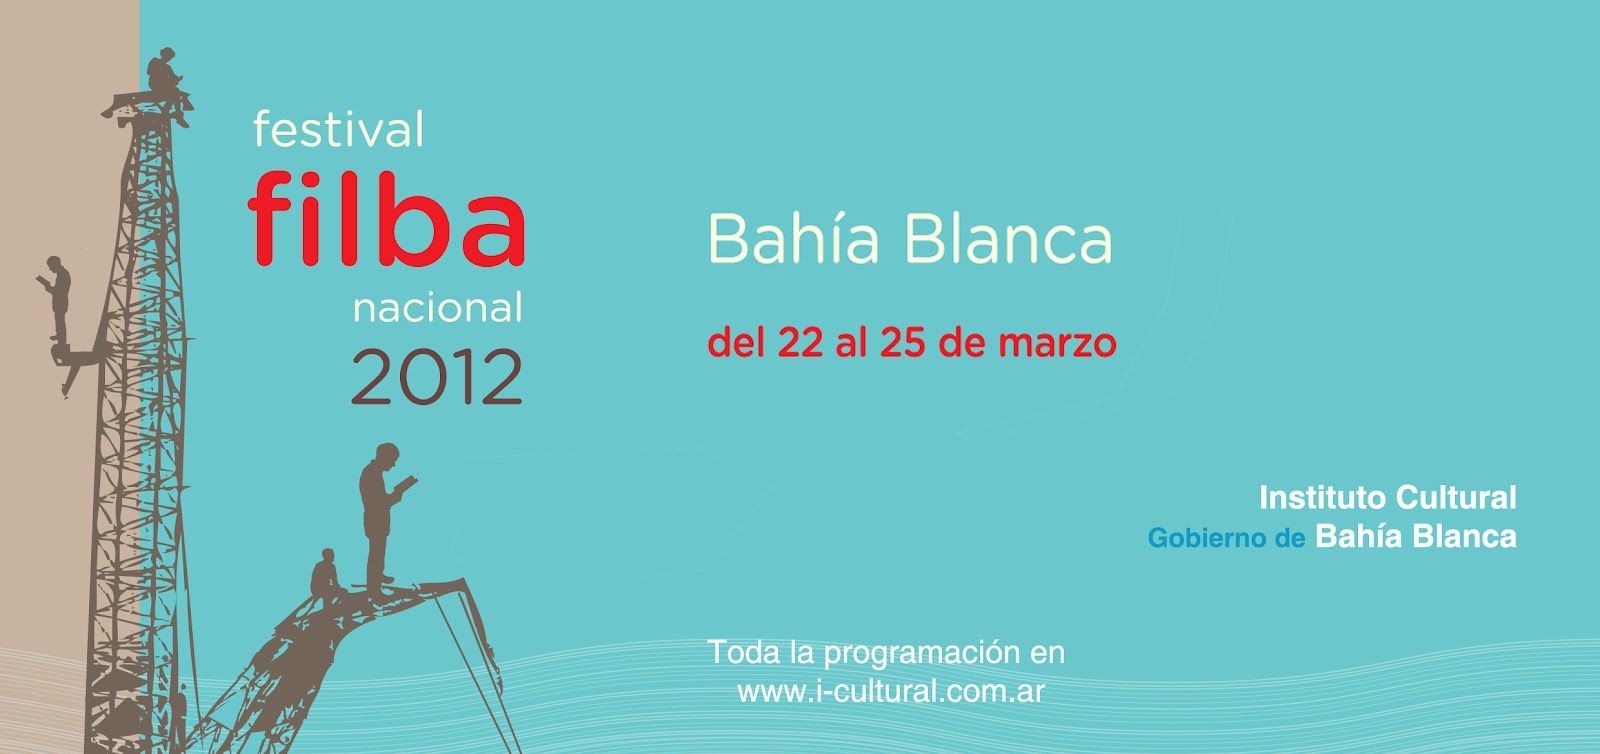 Filba Nacional 2012 Bahía Blanca 